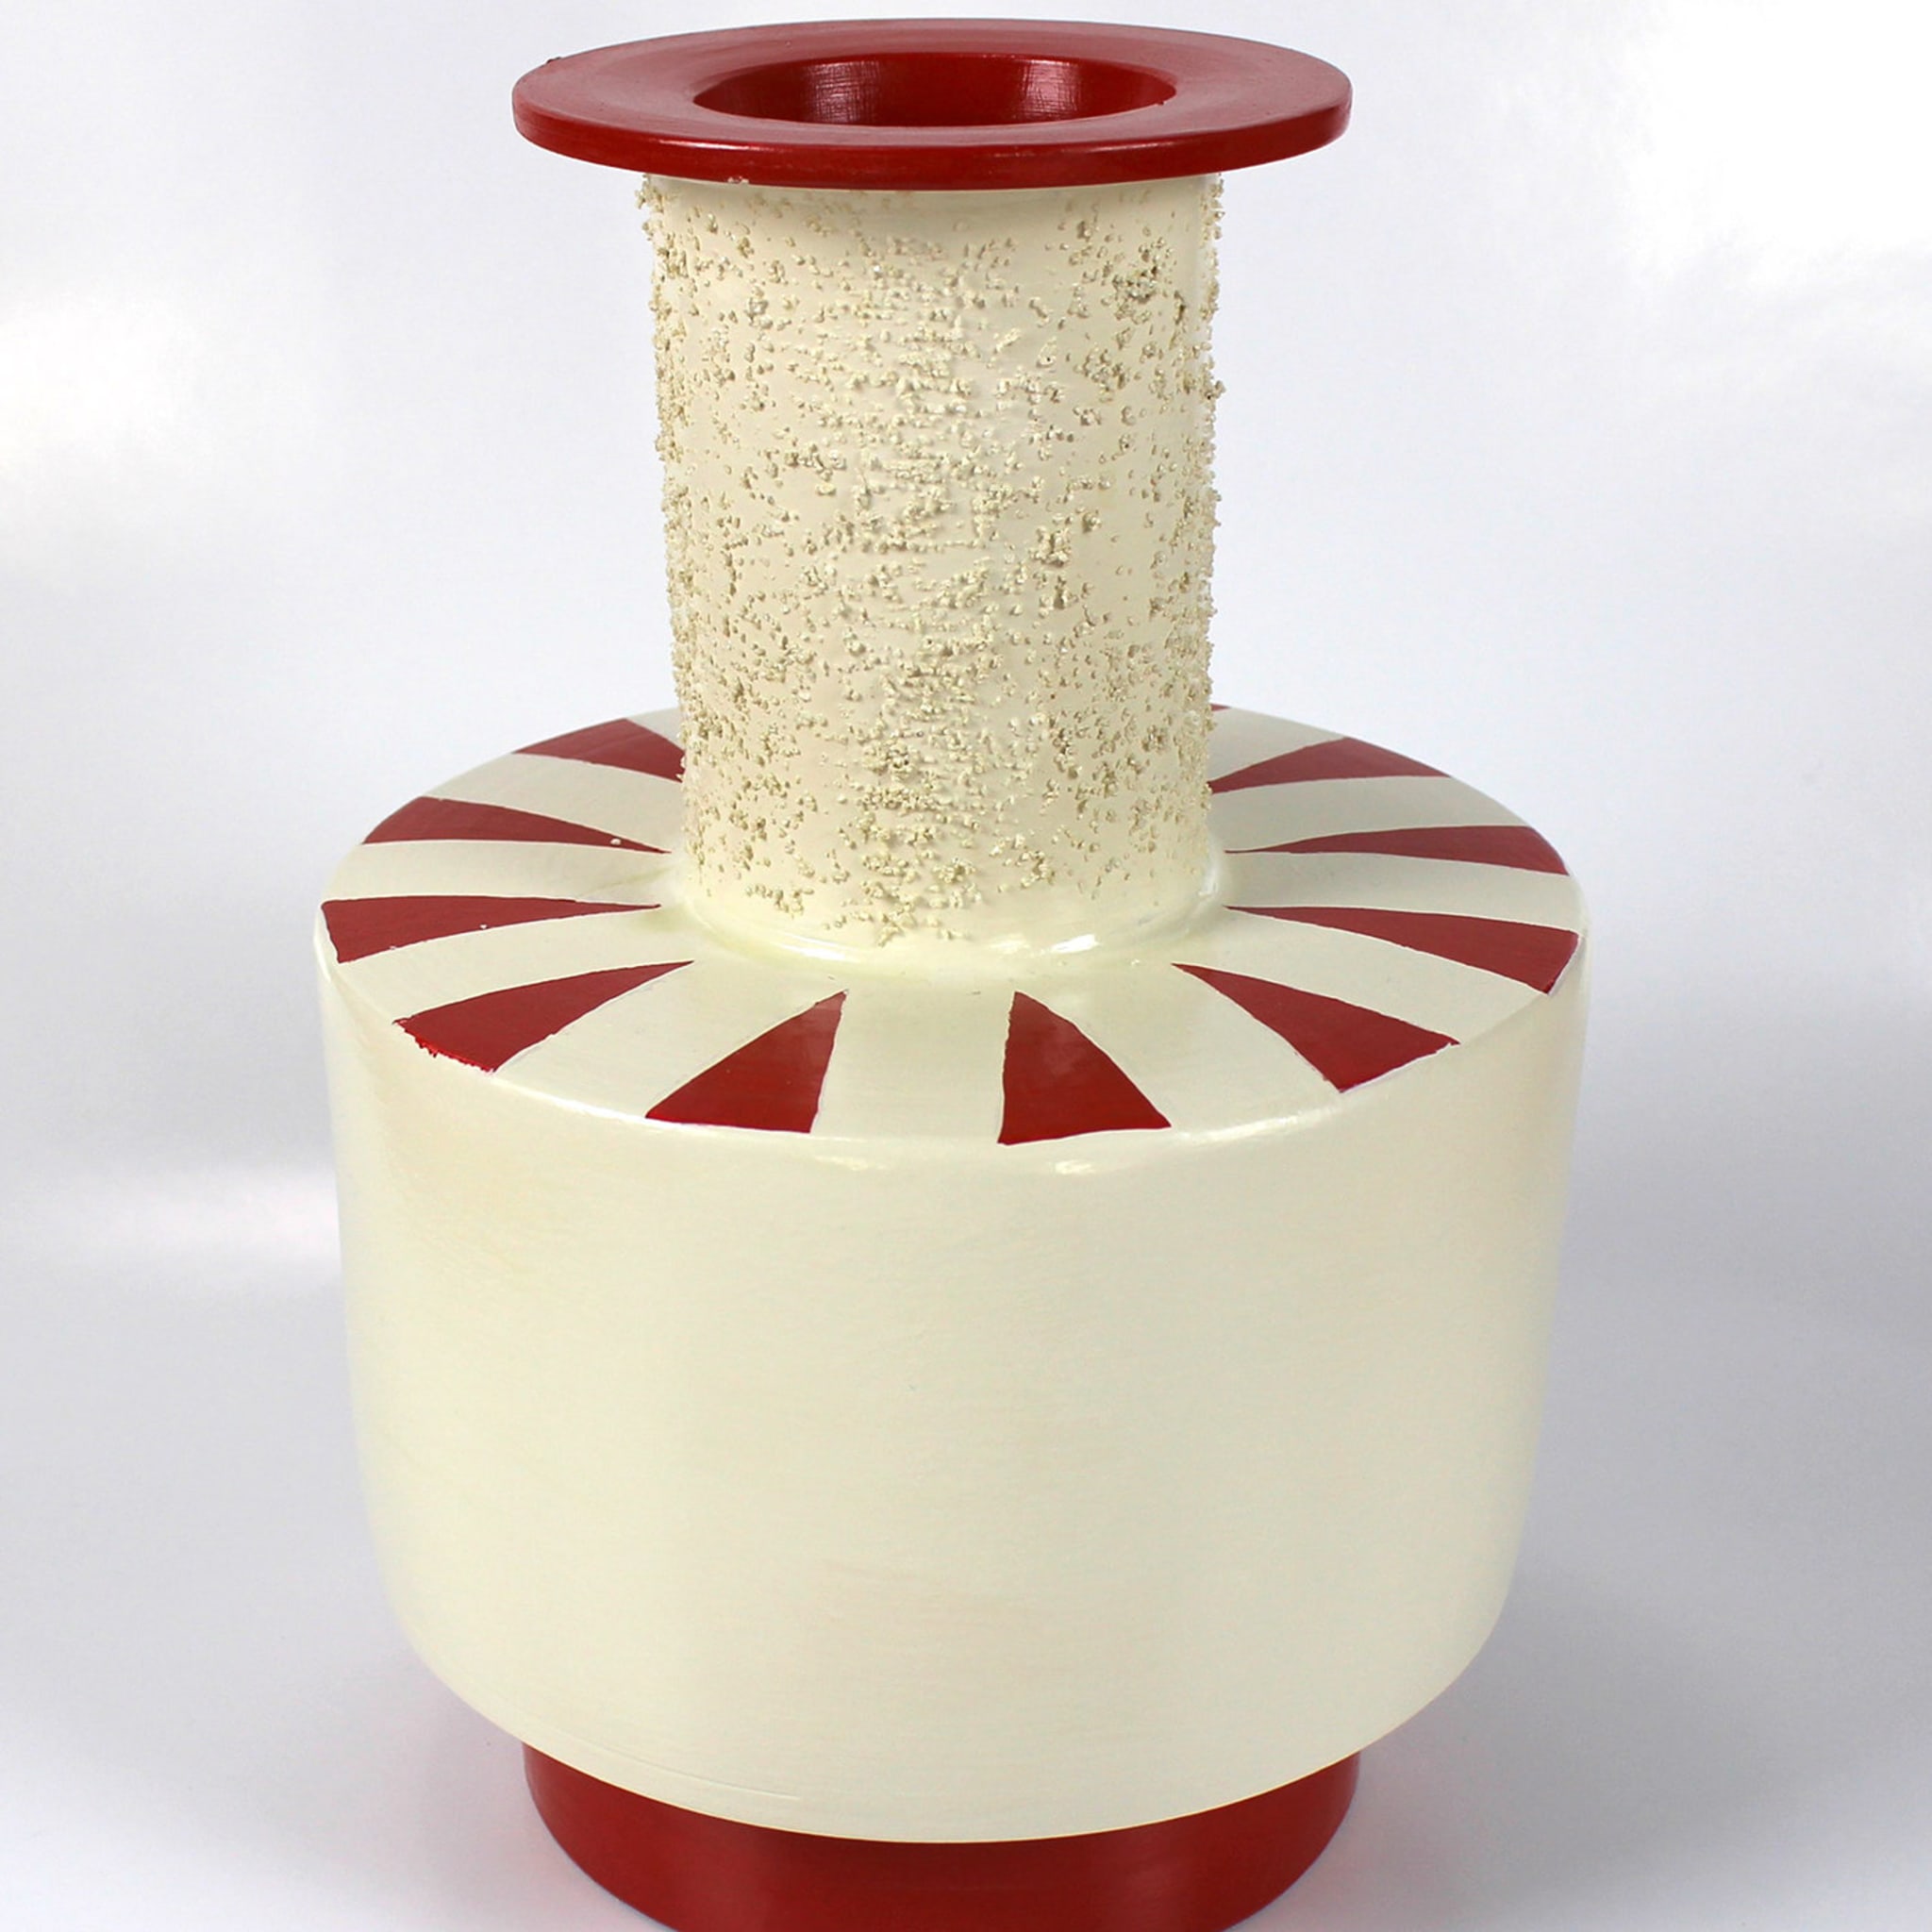 Terracotta Vase 12 by Mascia Meccani - Alternative view 3